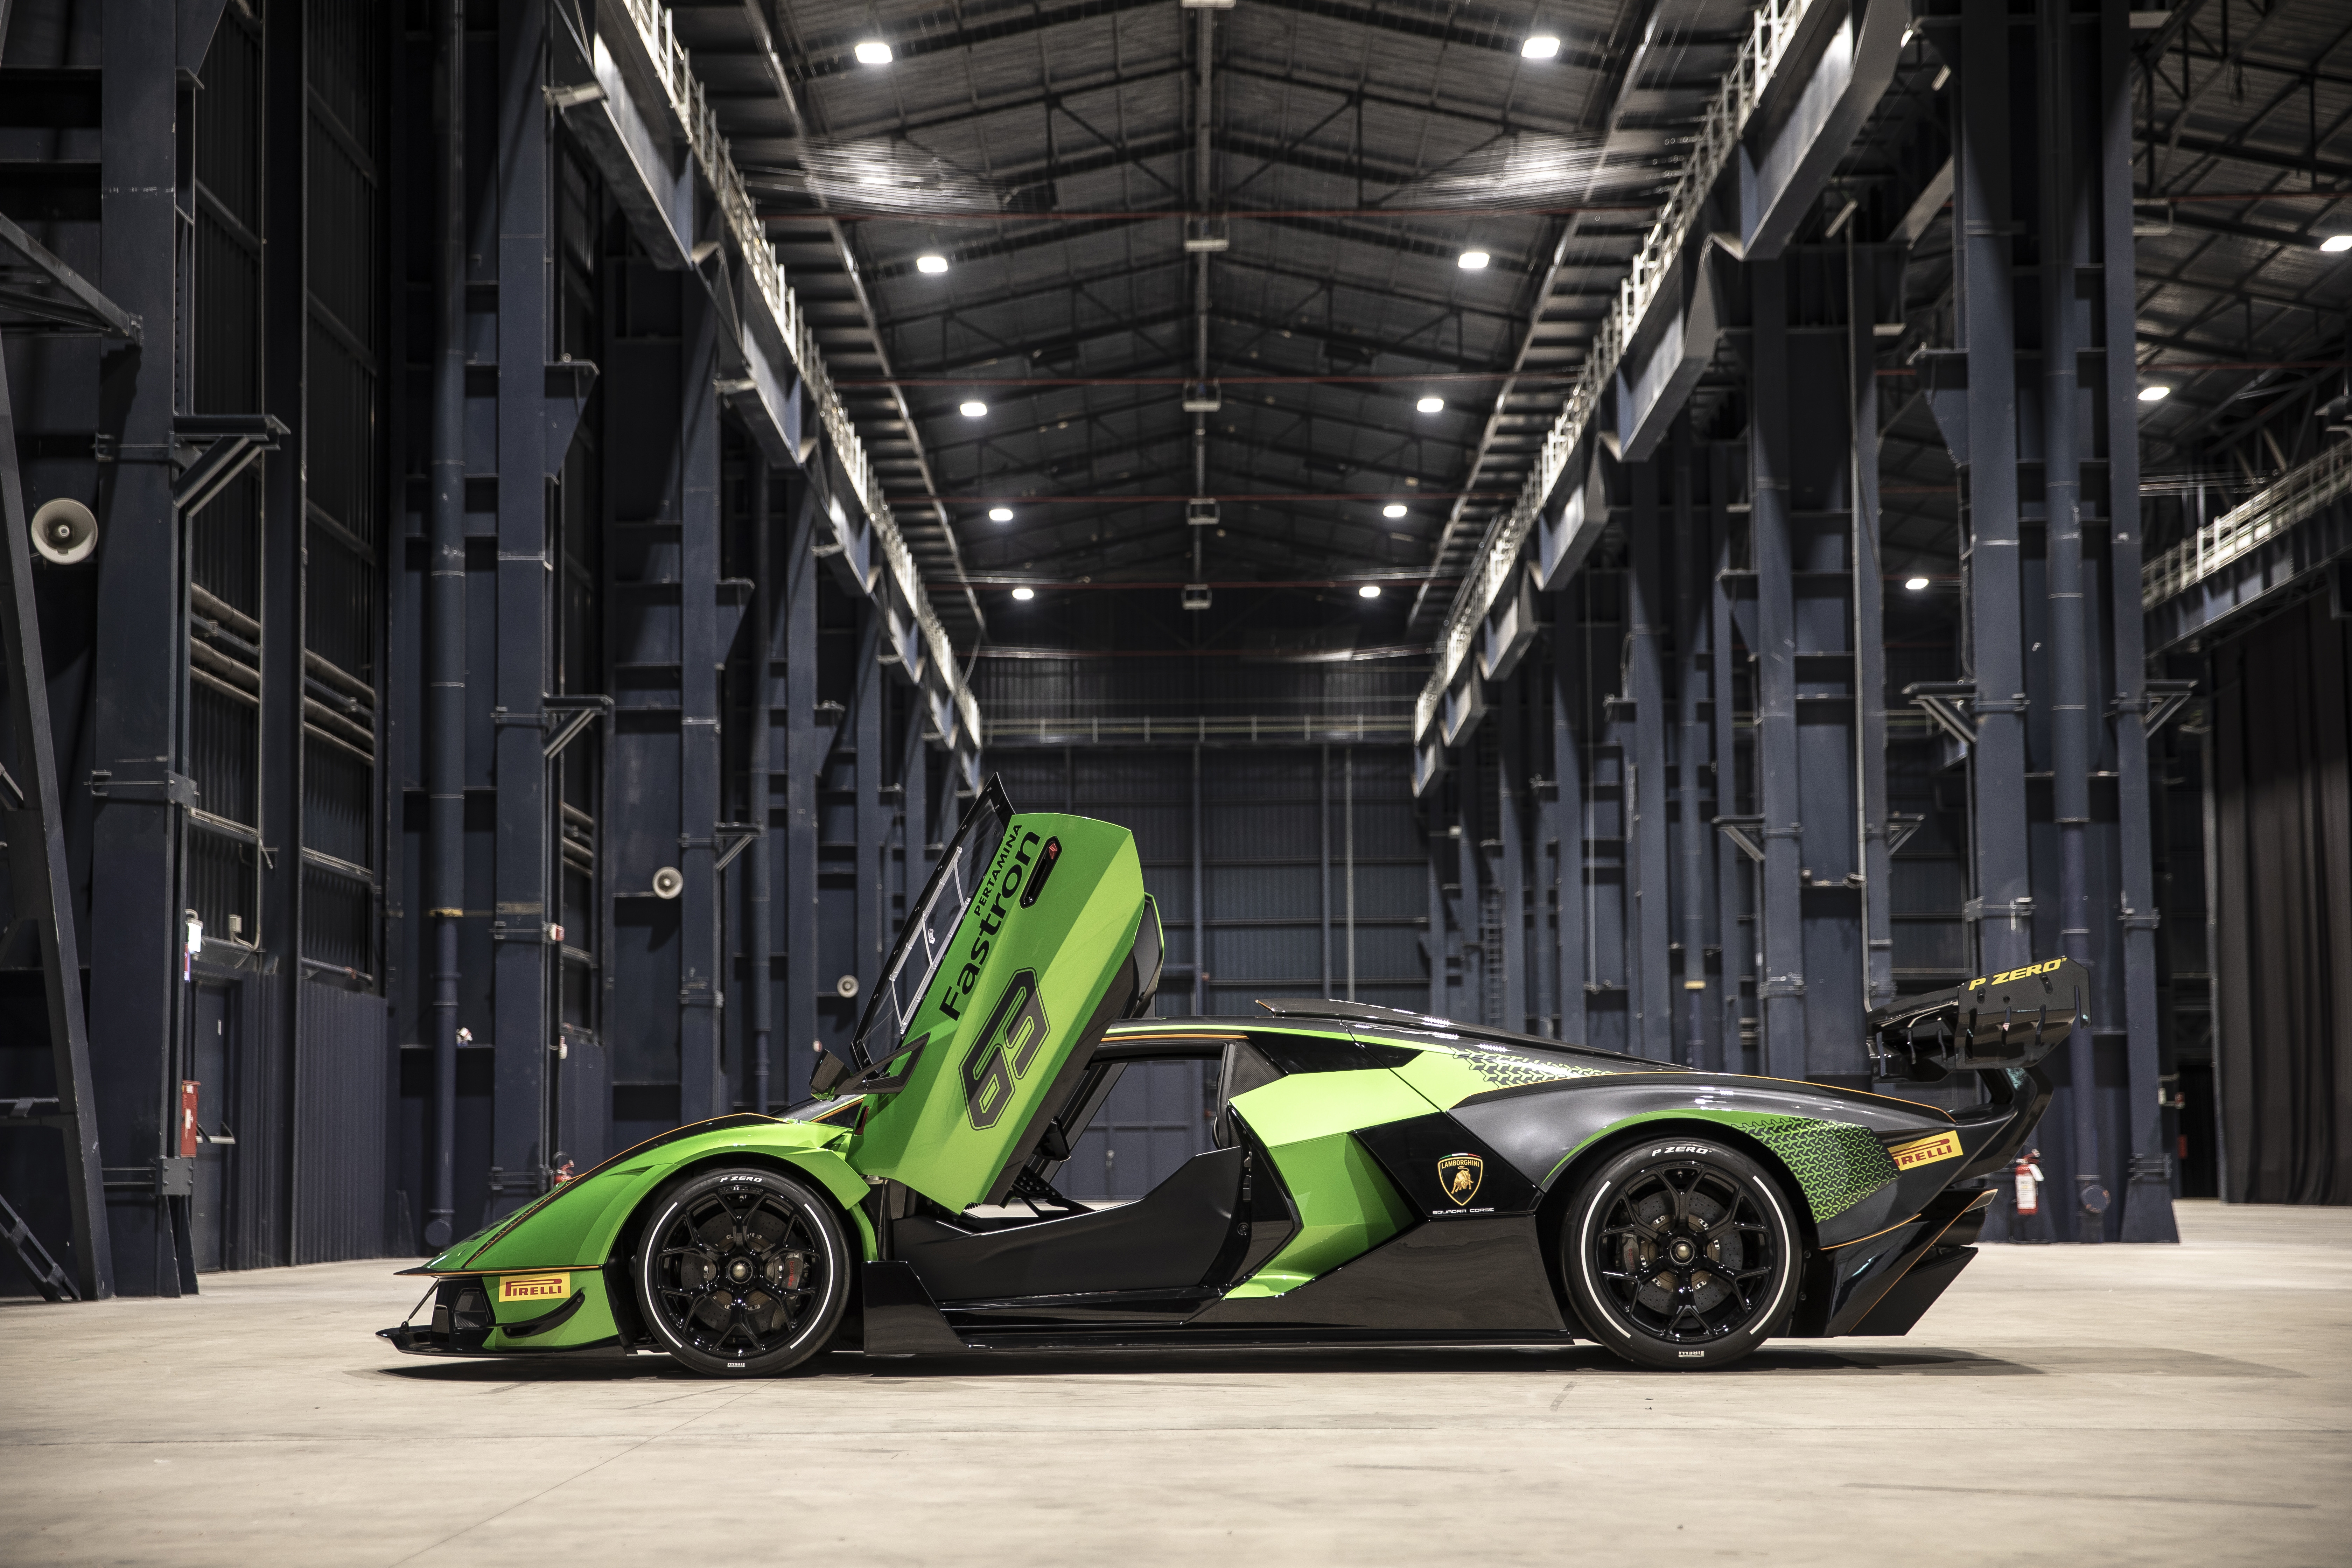 HD wallpaper, 5K, Hypercars, 2021, Performance Car, Lamborghini Essenza Scv12